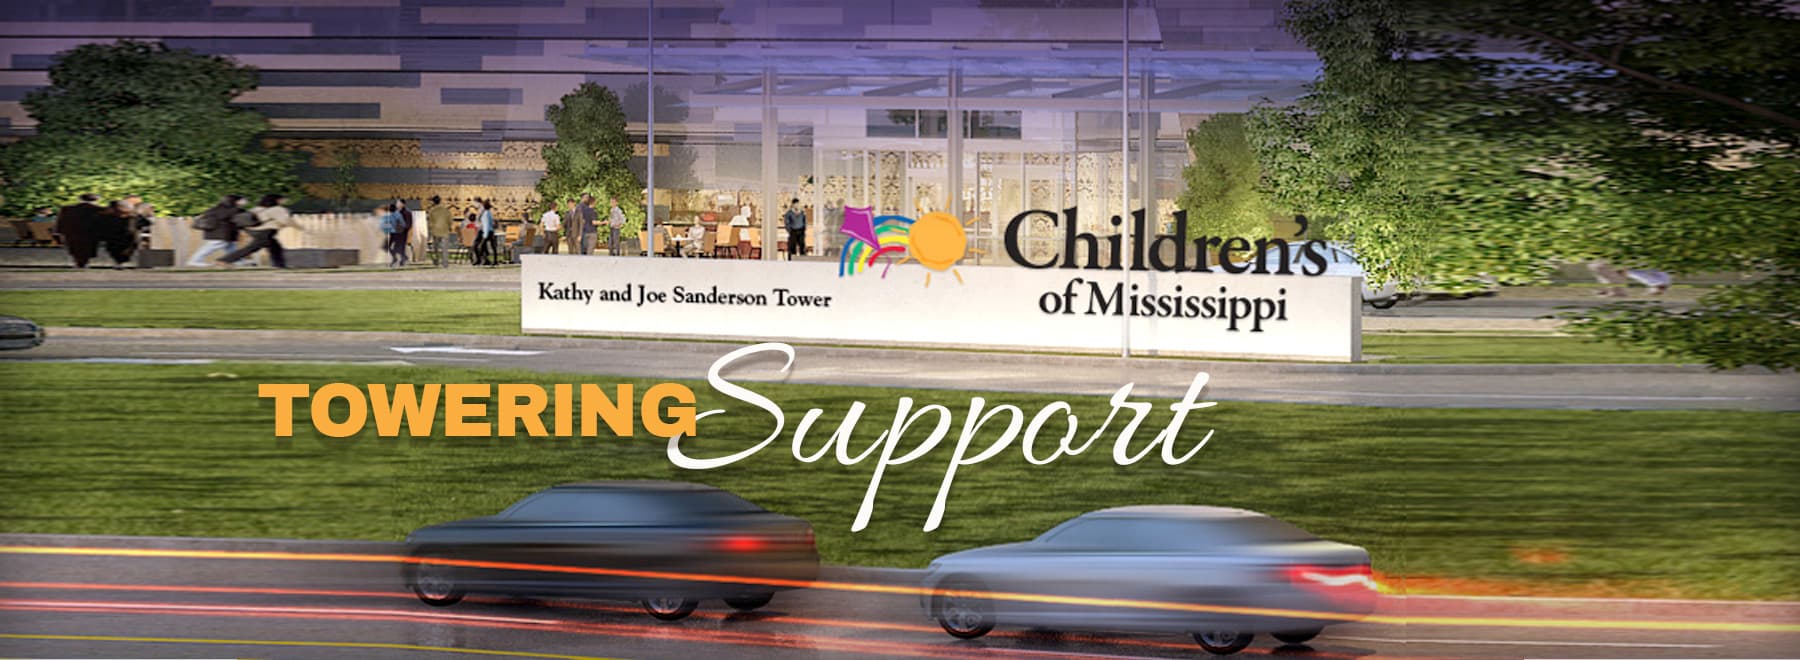 Kathy and Joe Sanderson Children's of Mississippi Tower naming render